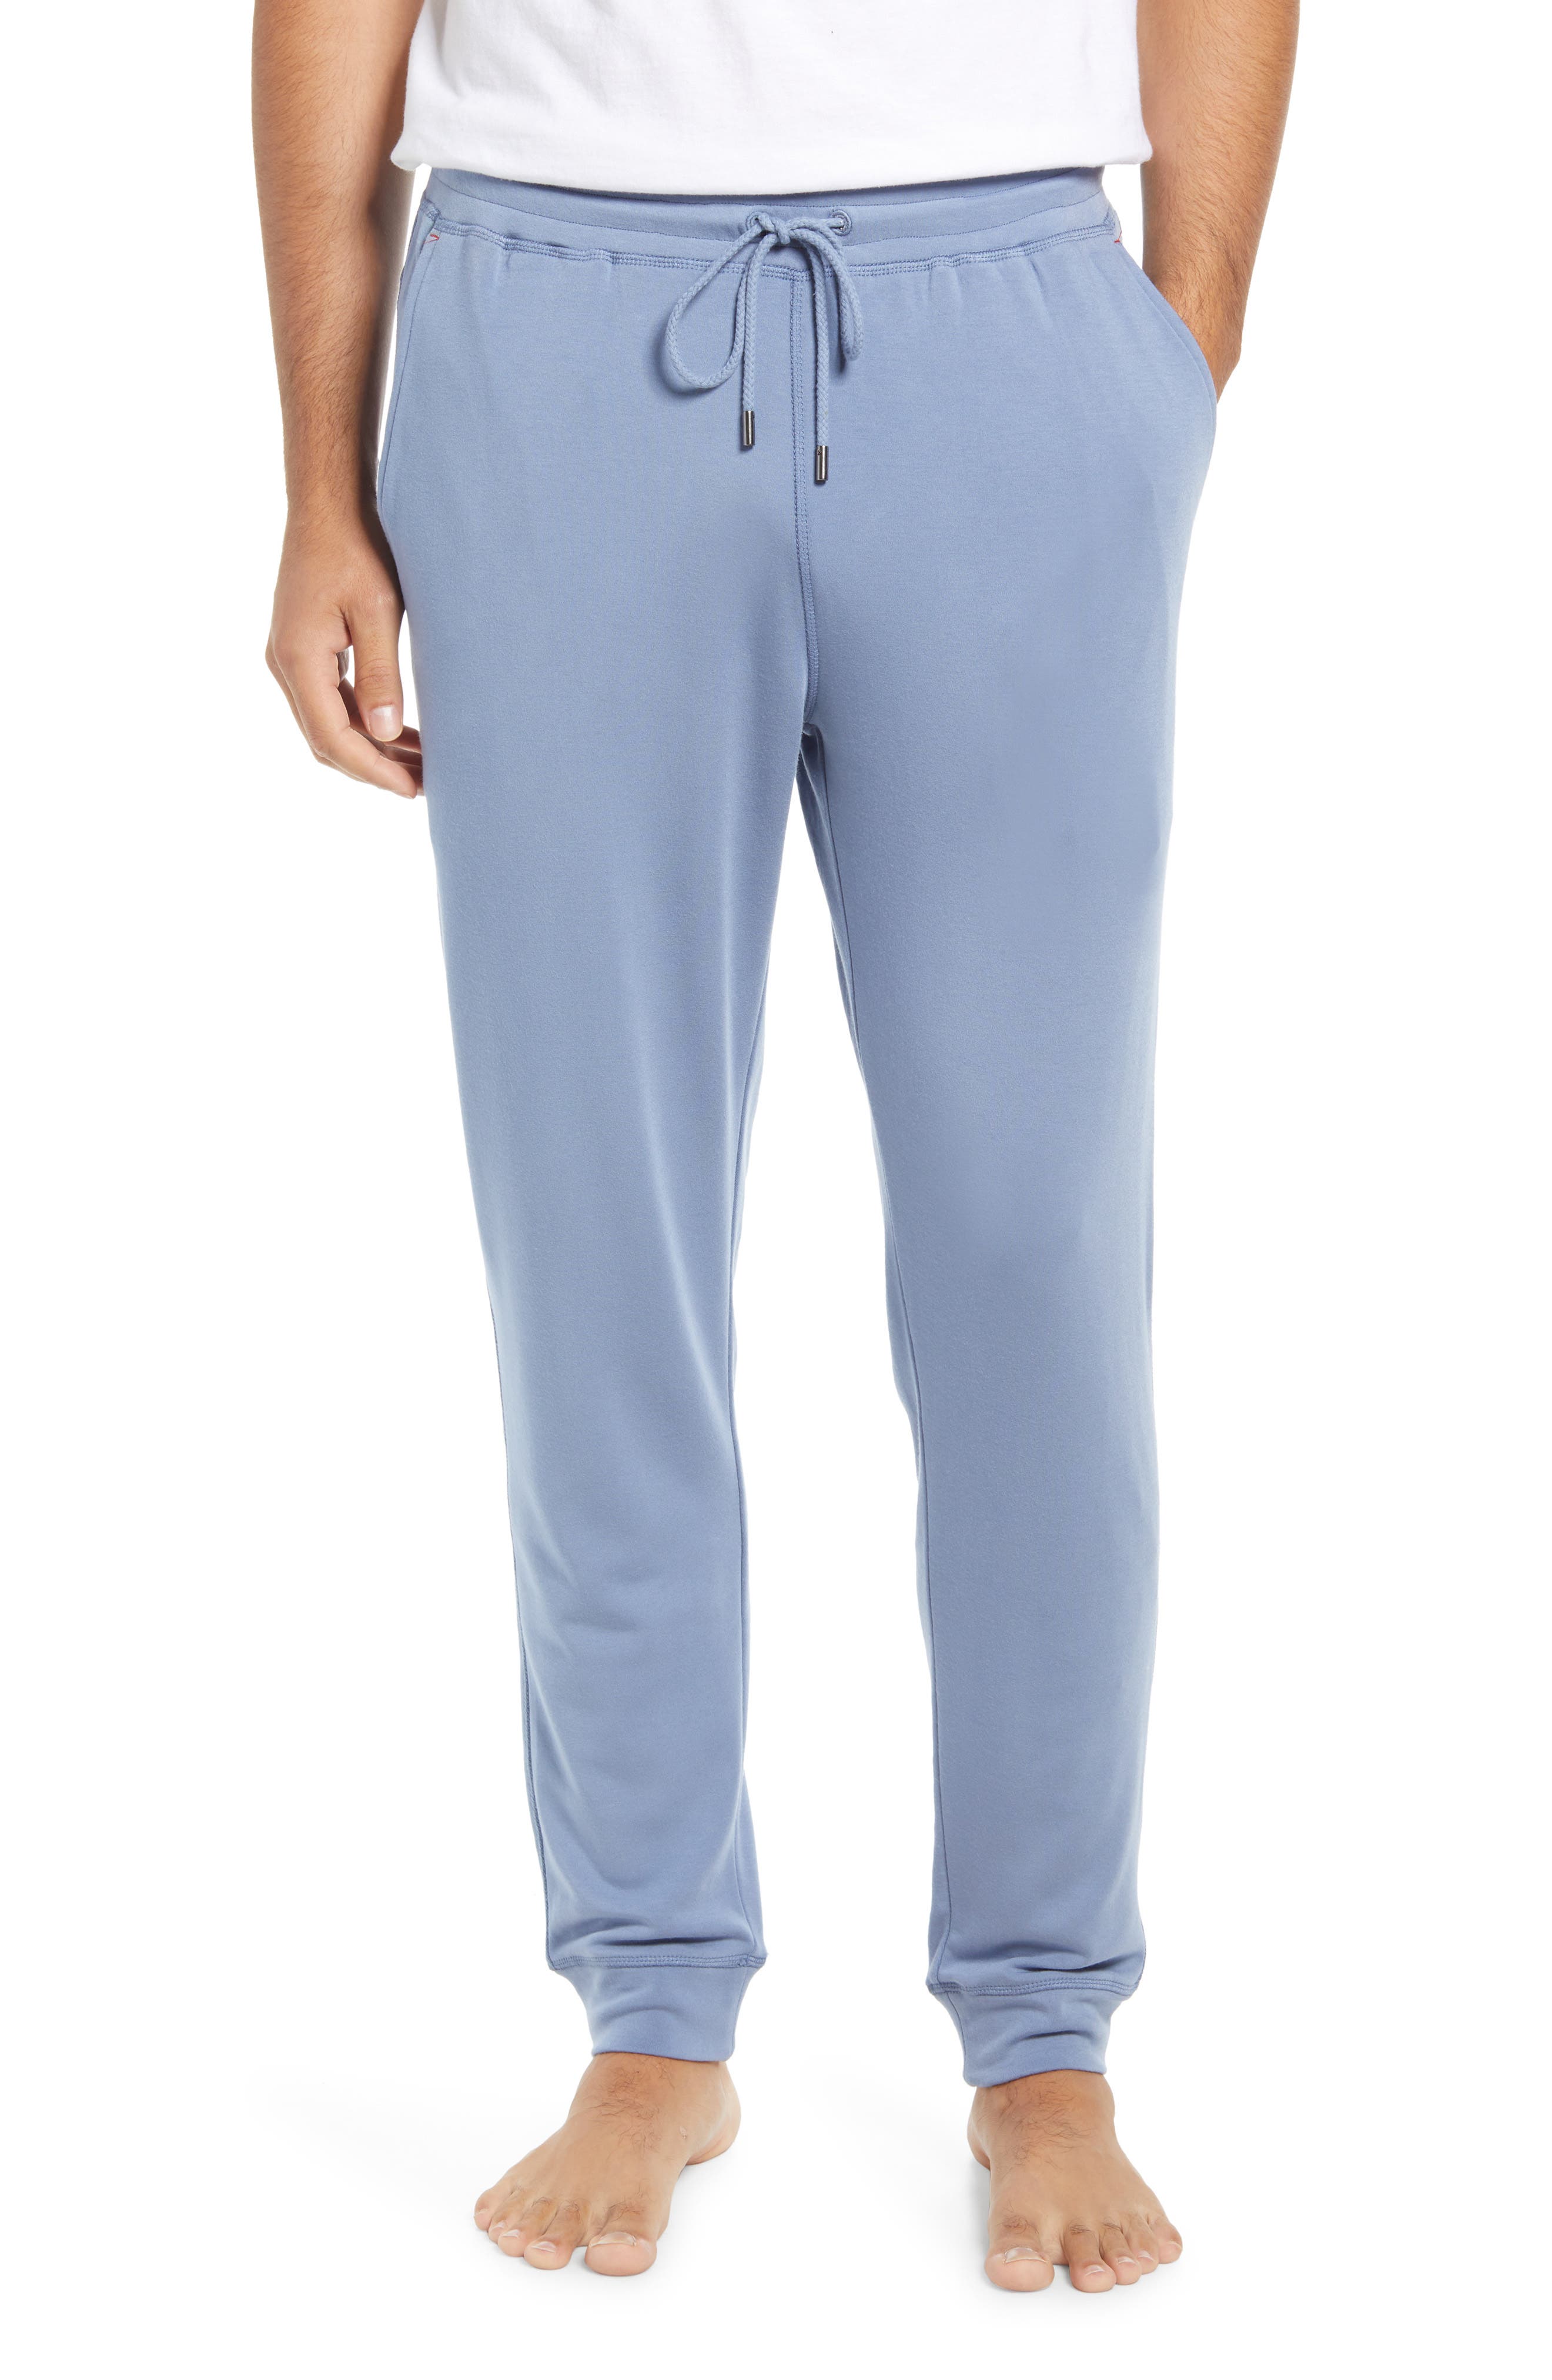 Men Pajama Trousers Sleep Lounge Pants Sport Classic Slacks Tracksuit Sweatpants